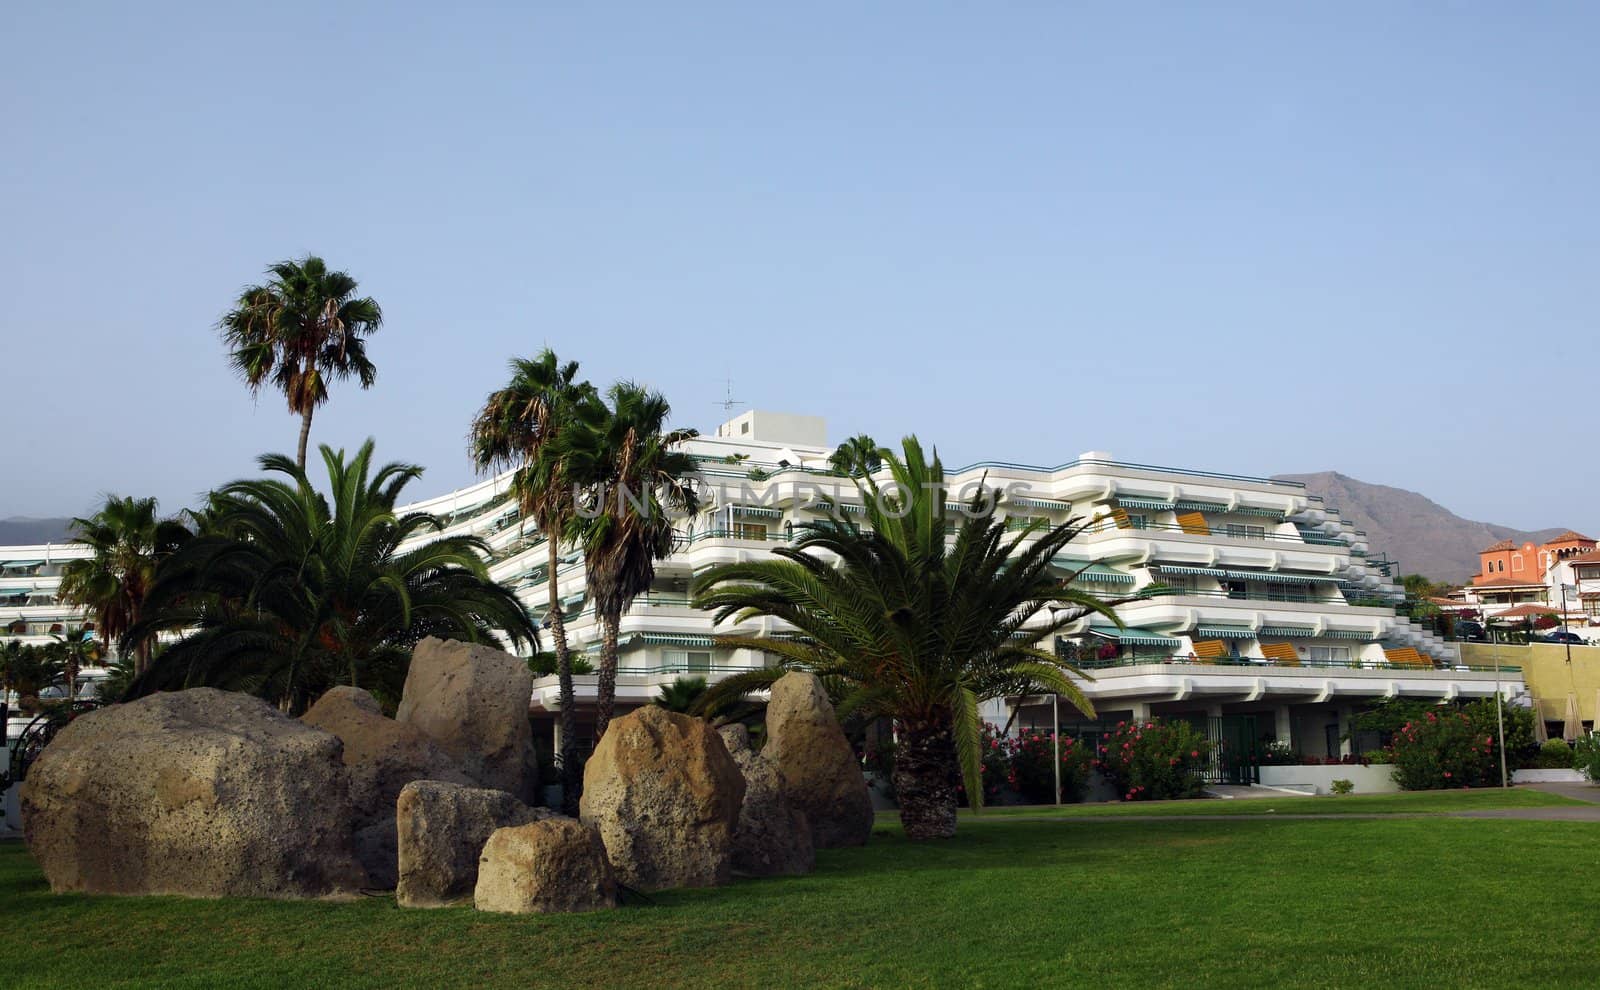 Big hotel with palms and stones around on Costa Adeje, Tenerife